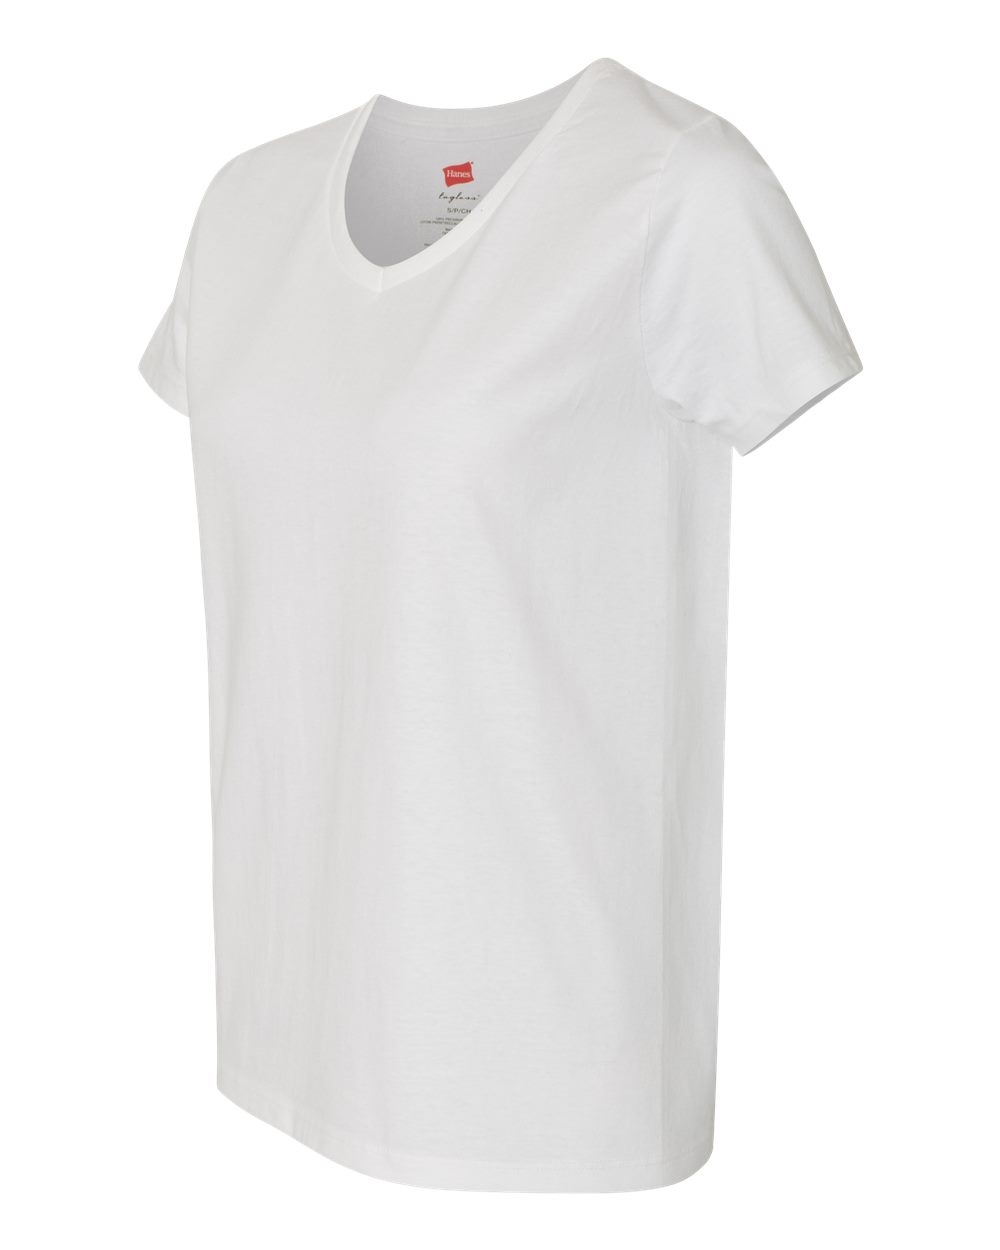 Hanes 5780 - Essential-T Women's V-Neck T-Shirt